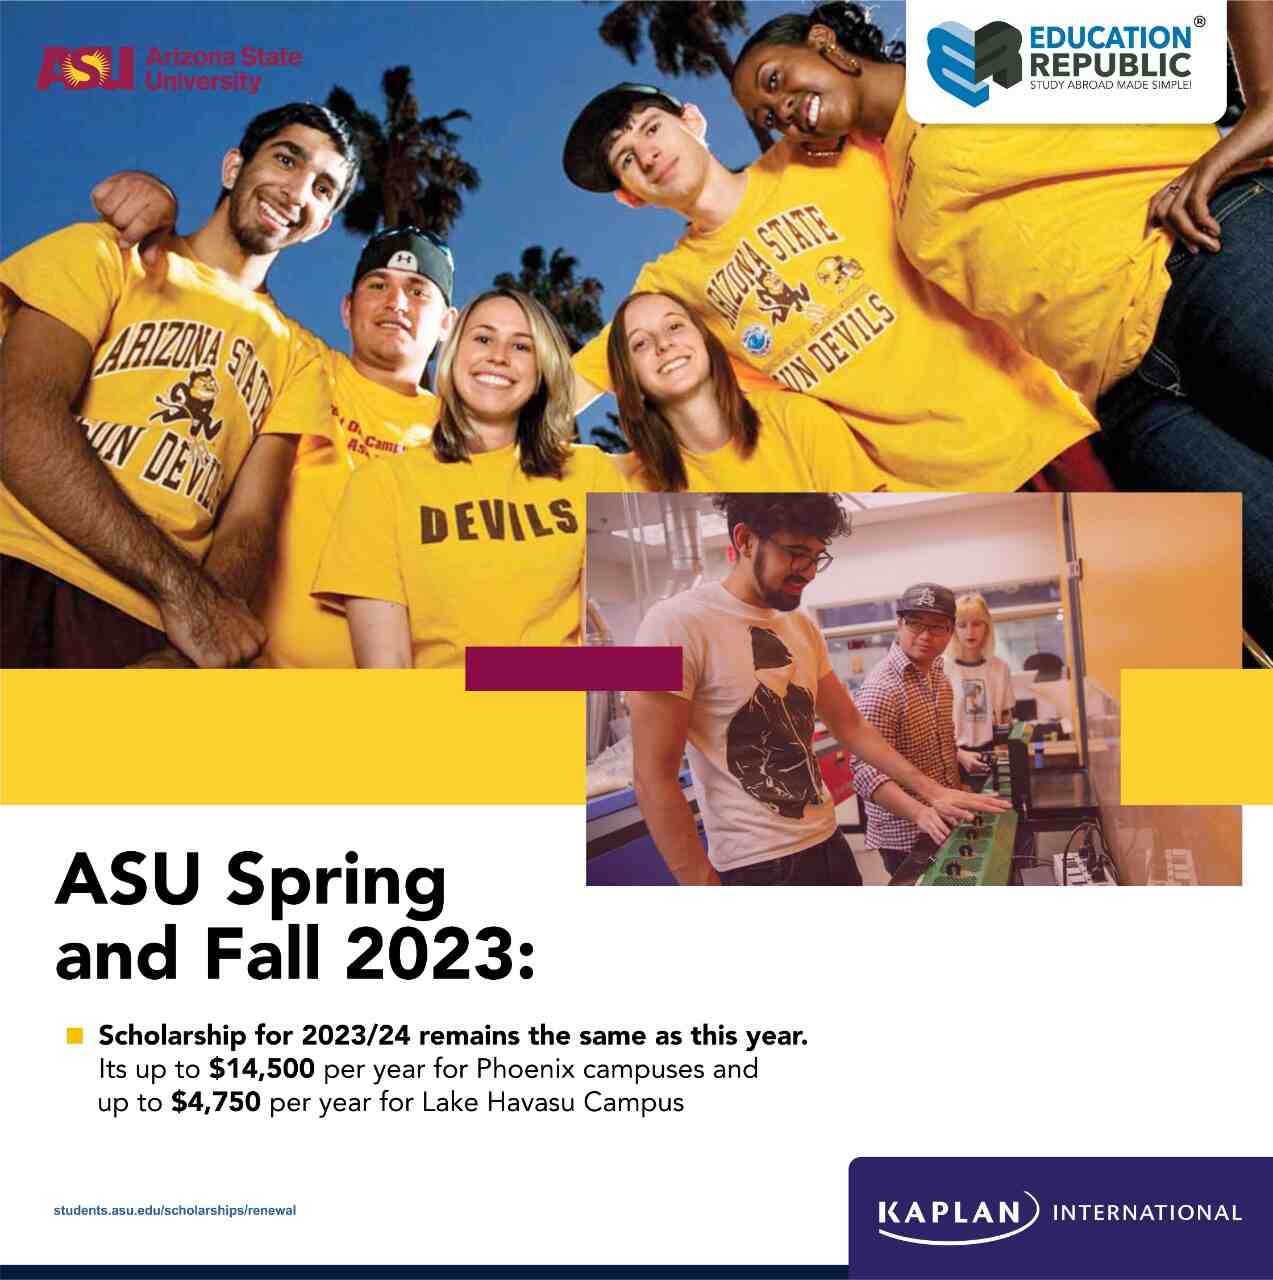 Syarat Daftar & Beasiswa Kuliah di Arizona State University 2023